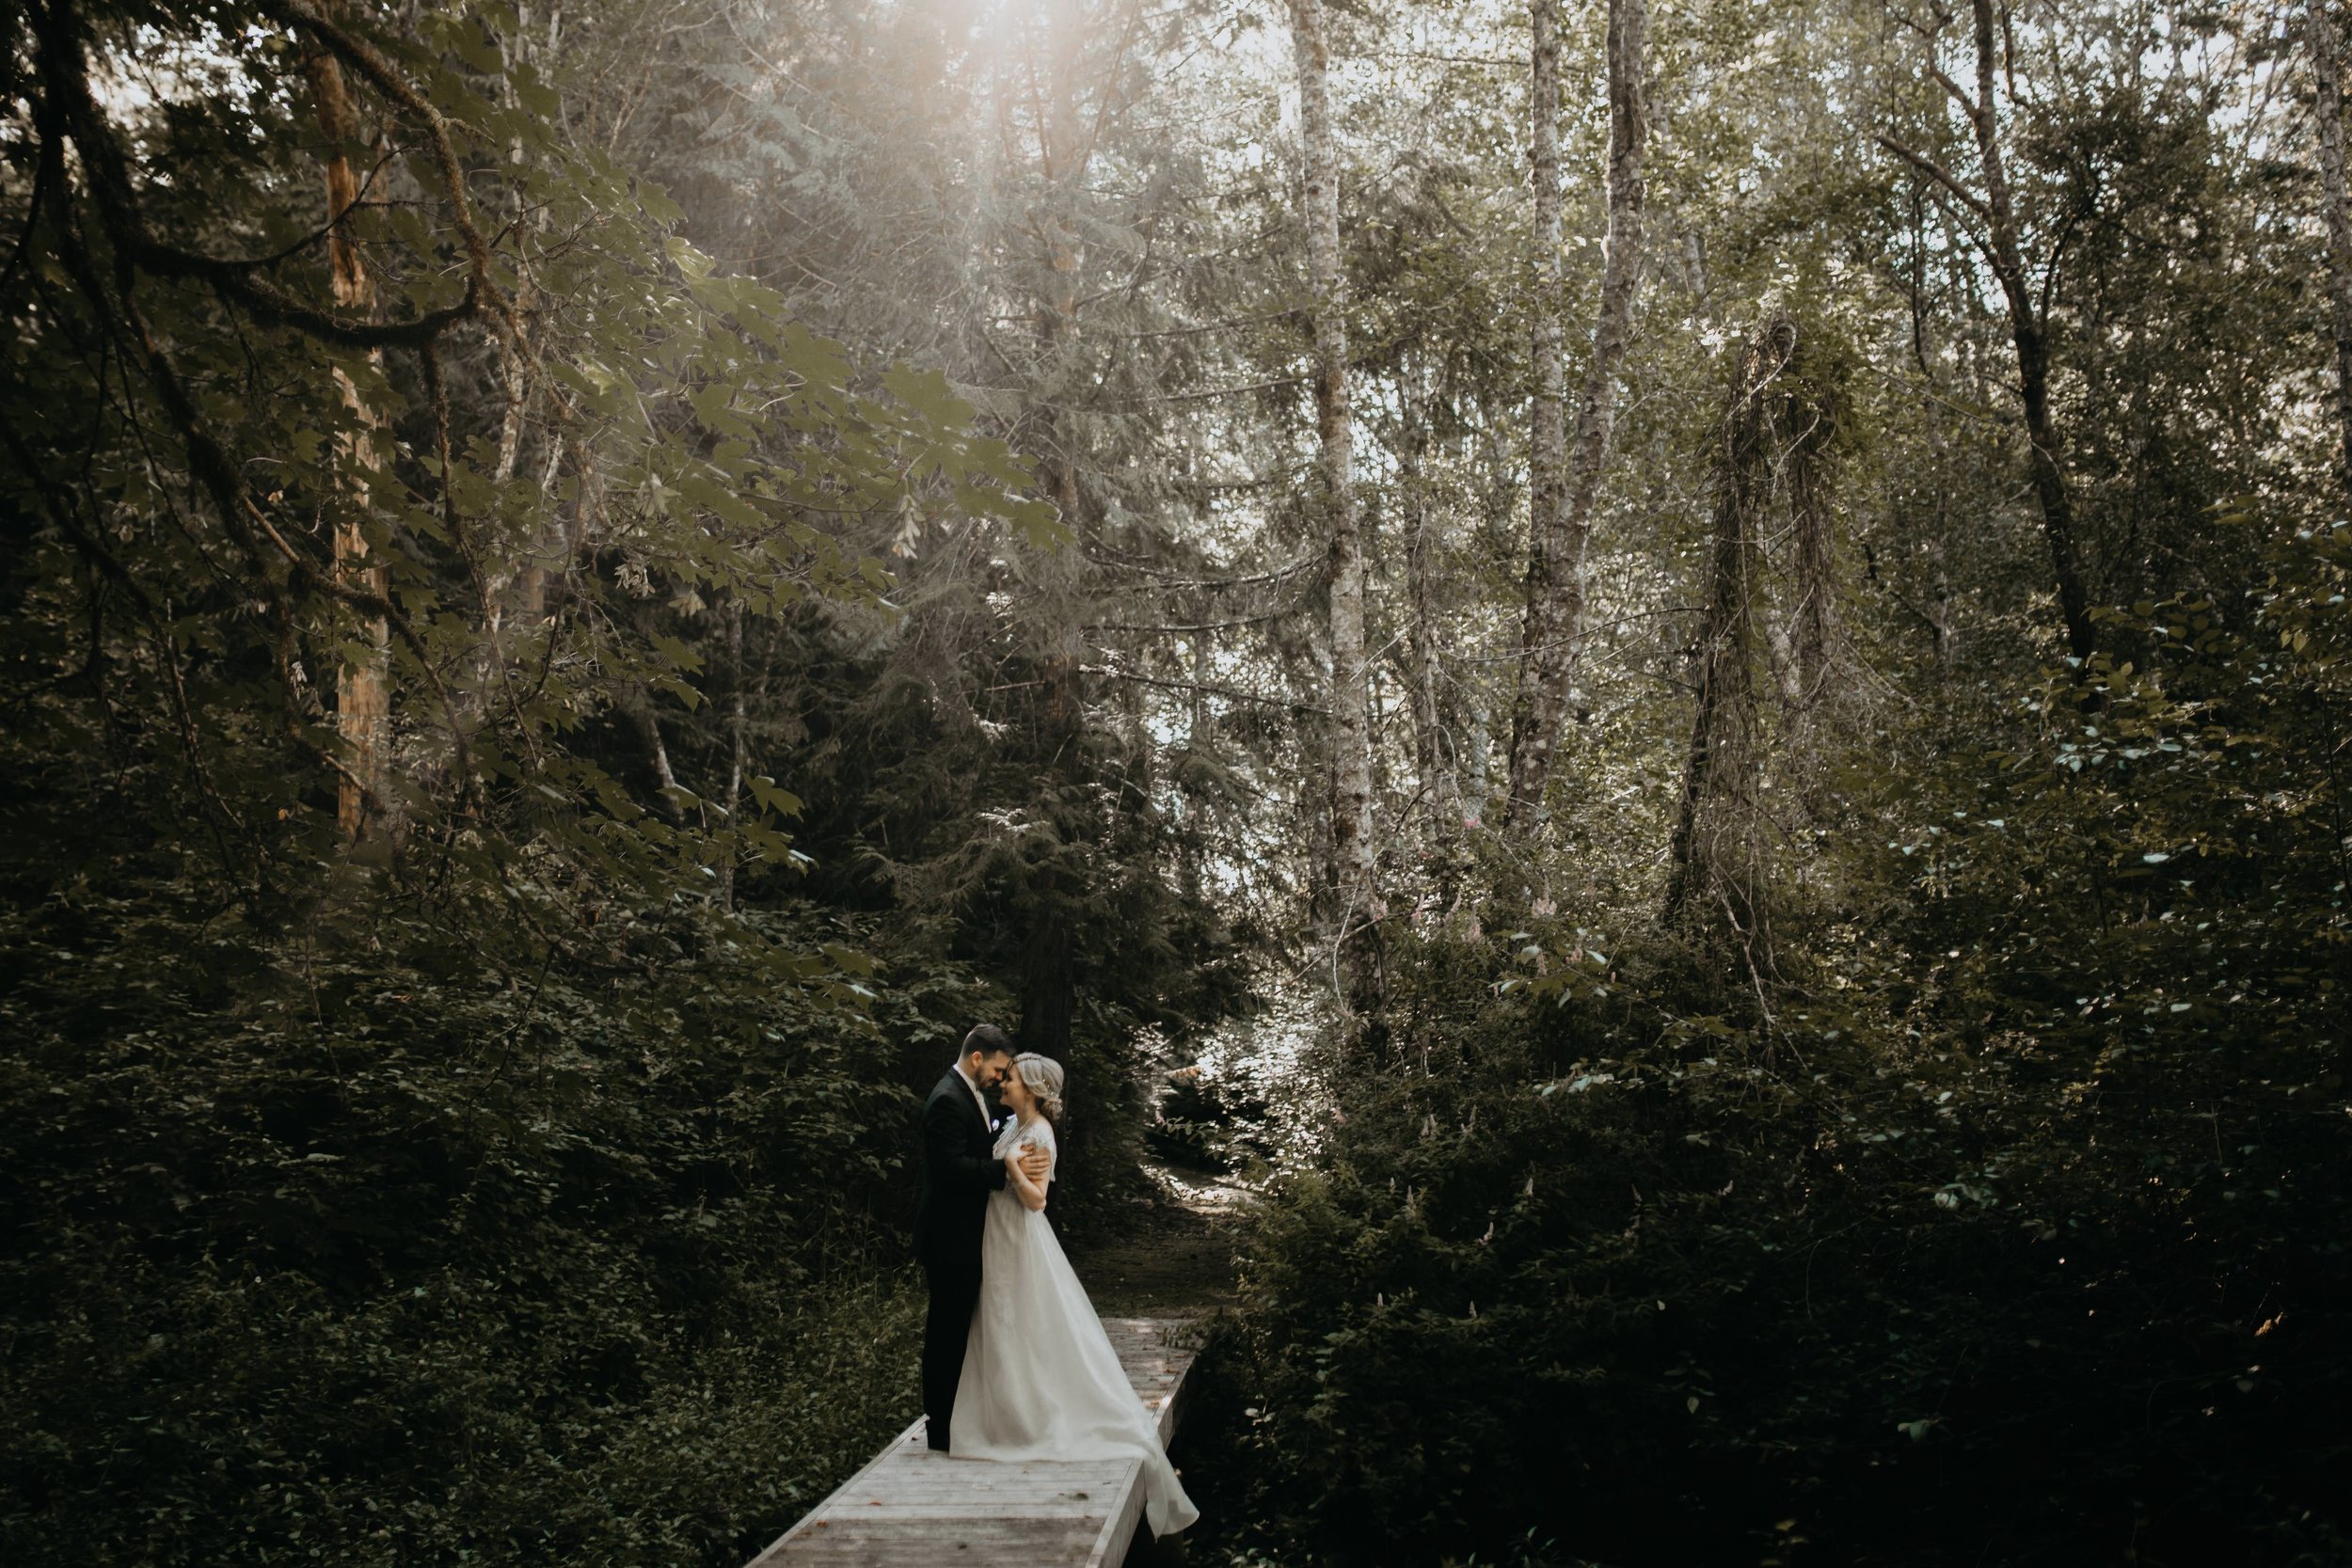 nicole-daacke-photography-kingston-house-bainbride-washington-wedding-photography-summer-wedding-lavendar-field-pacific-northwest-wedding-glam-forest-elopement-photographer-65.jpg